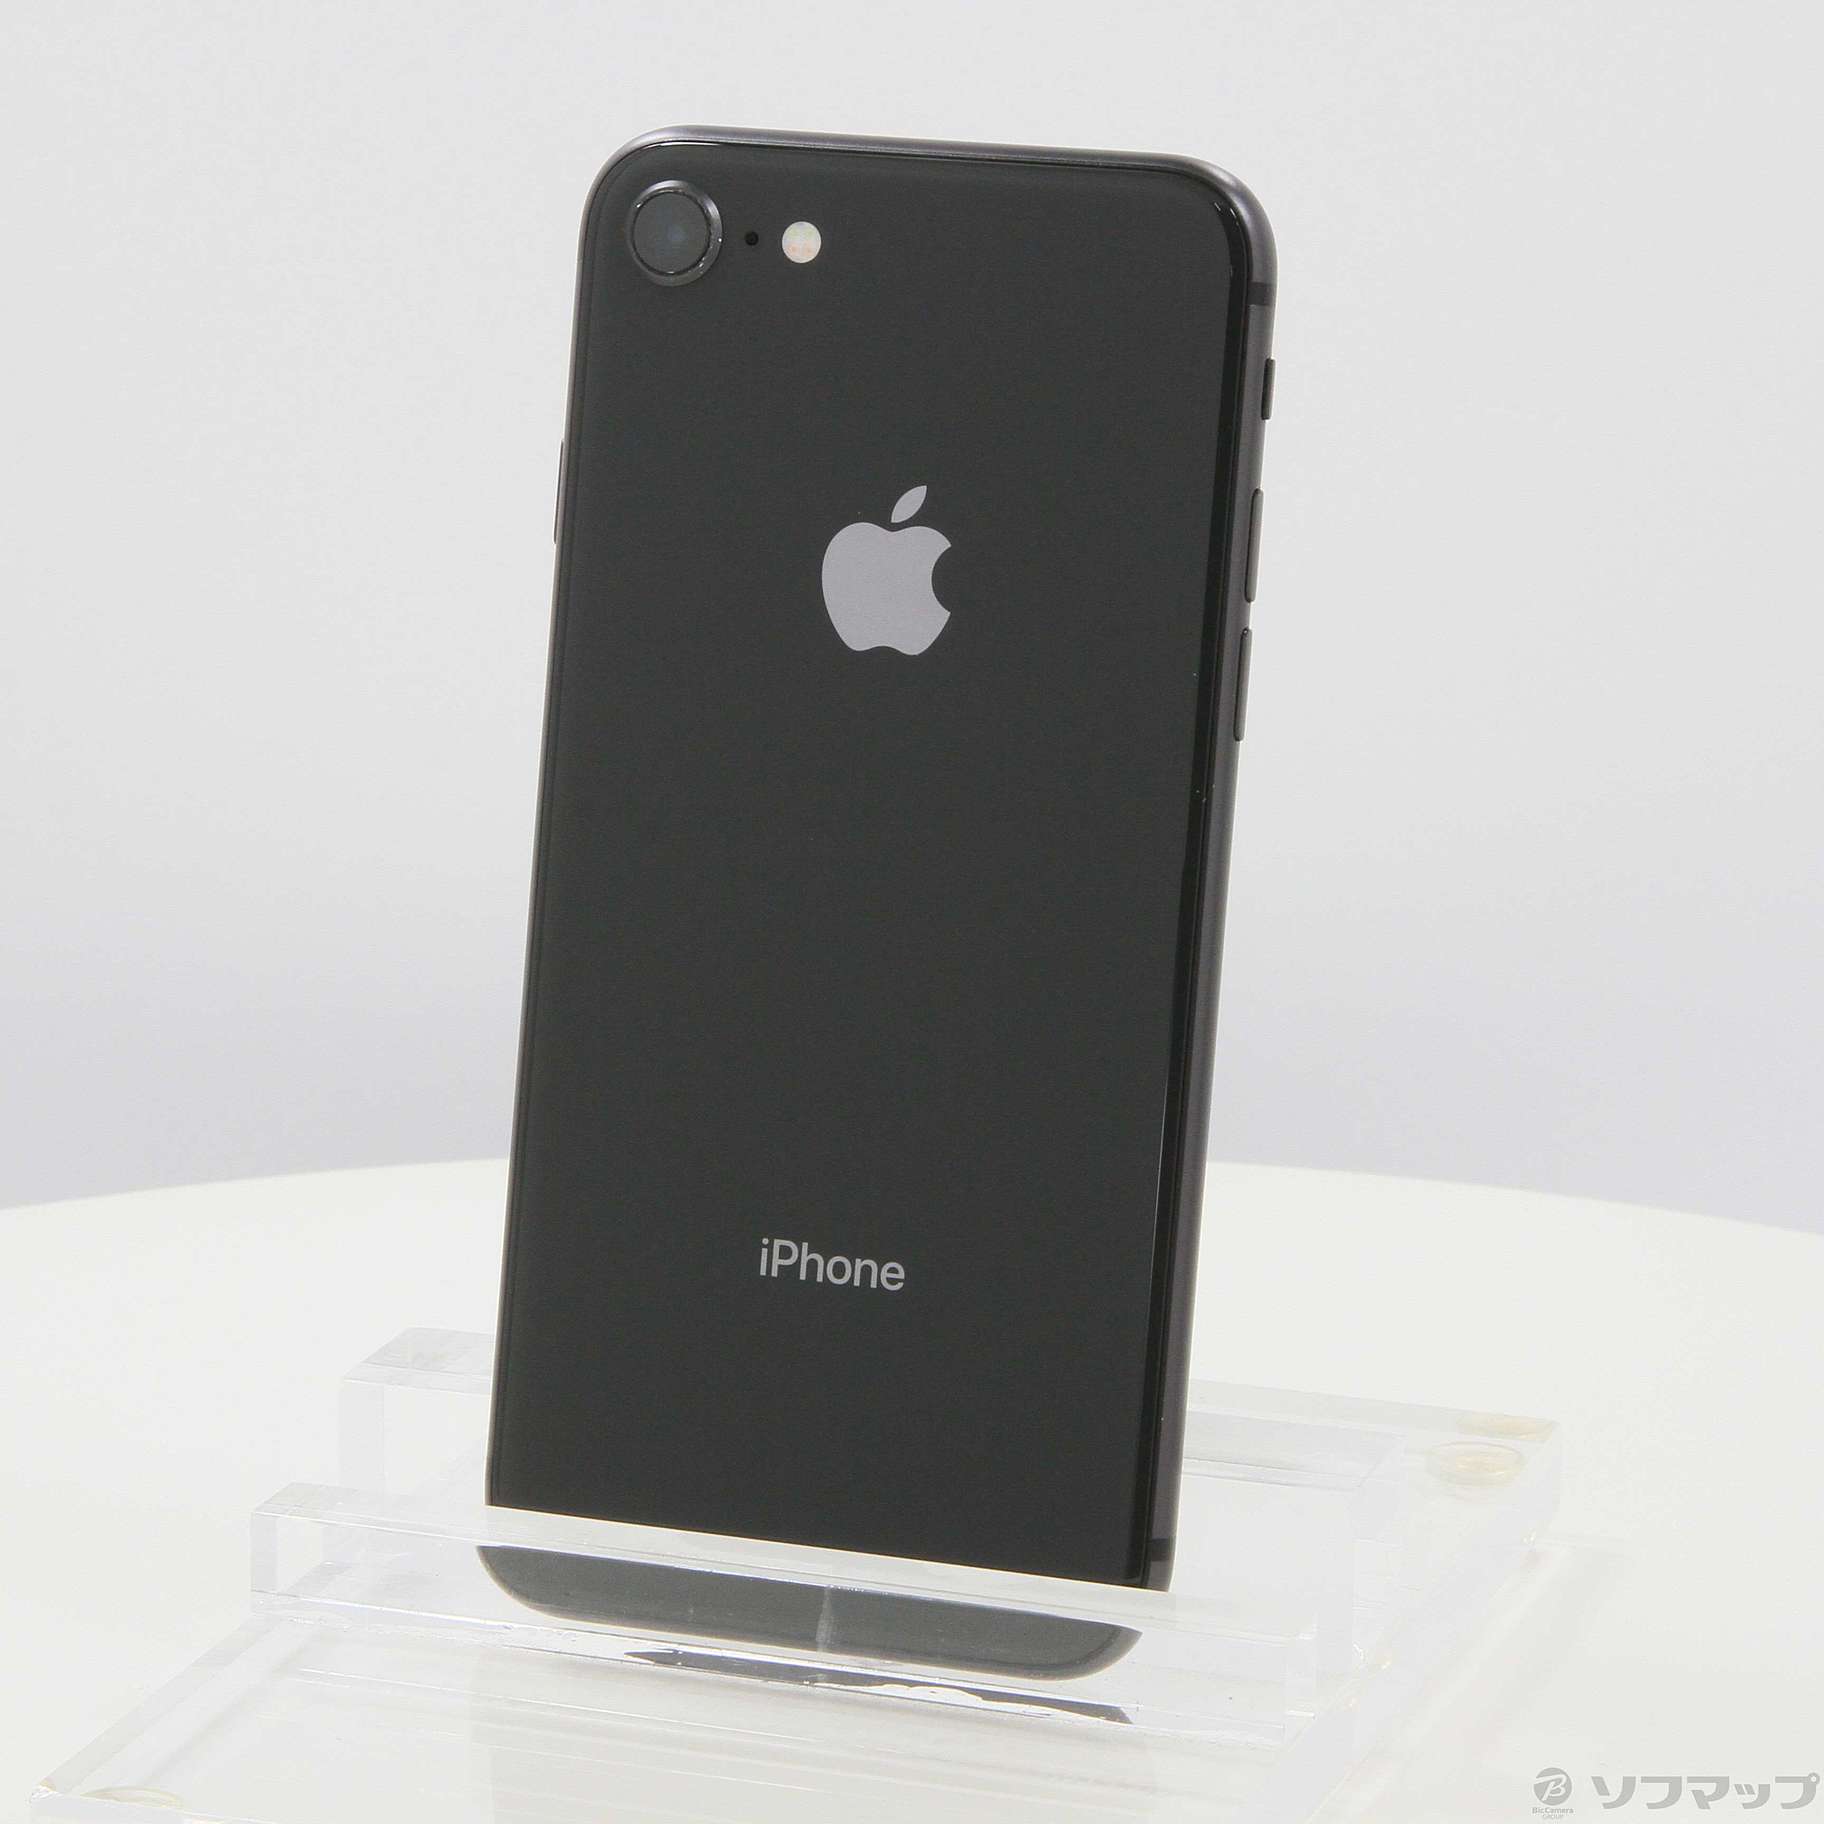 iPhone8 Space Gray 256GB SIMフリー ジャンク